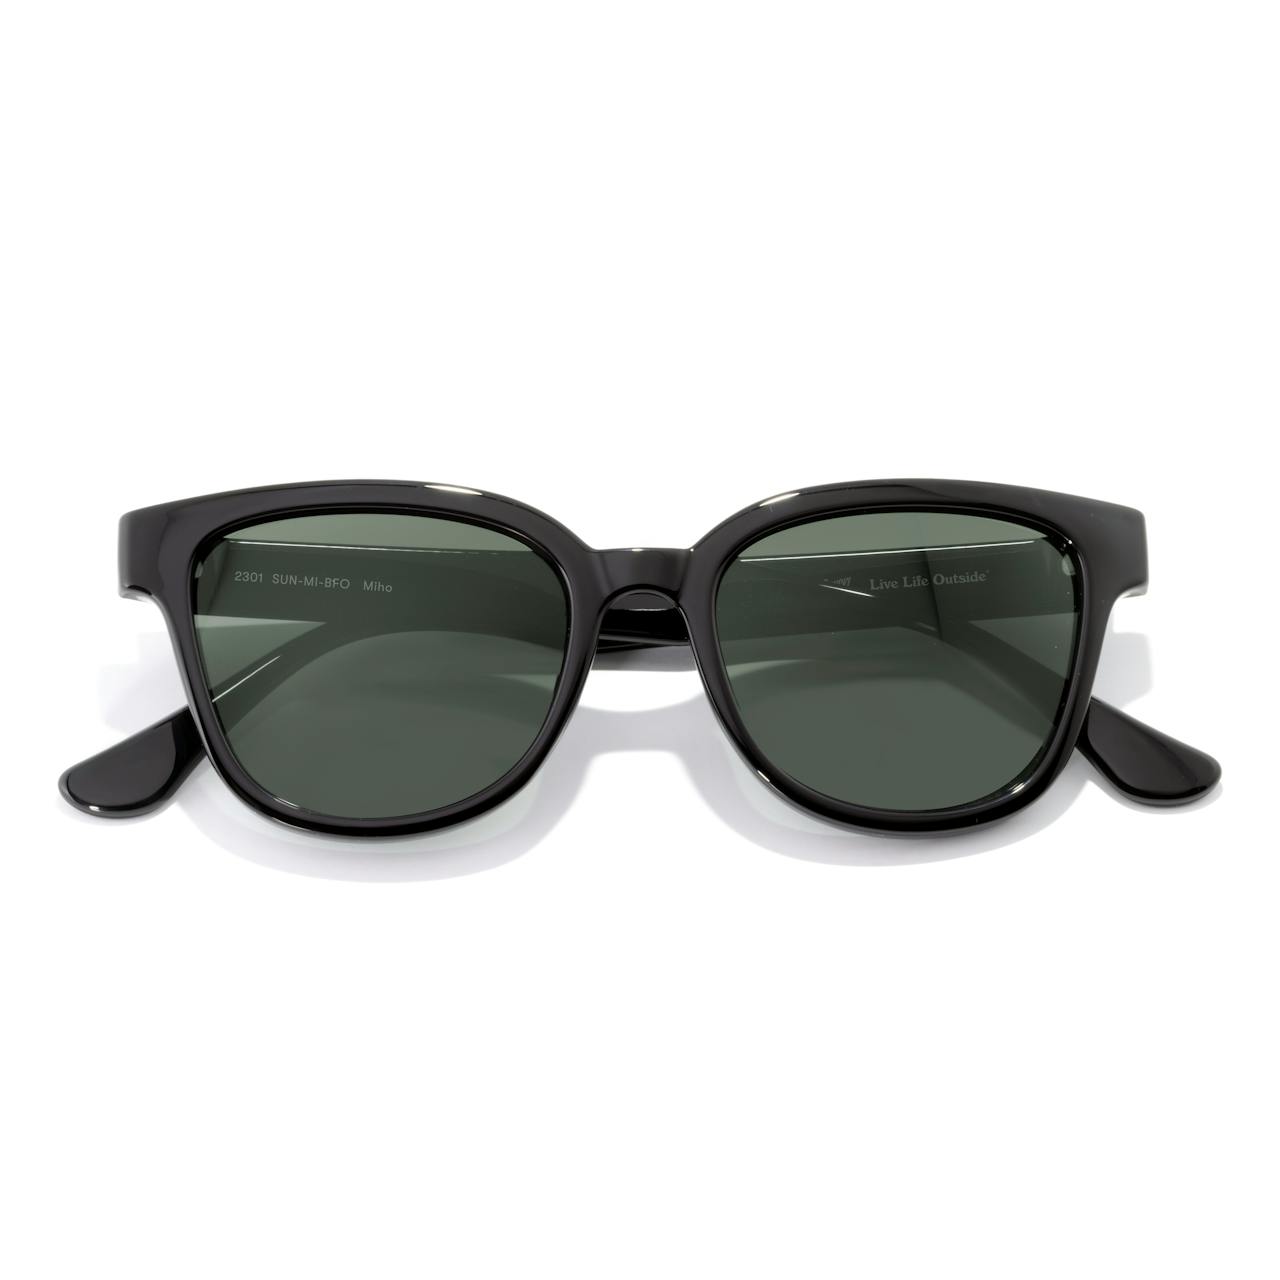 Sunglasses | Miho Sunski Black Huckberry | - Sunglasses Forest